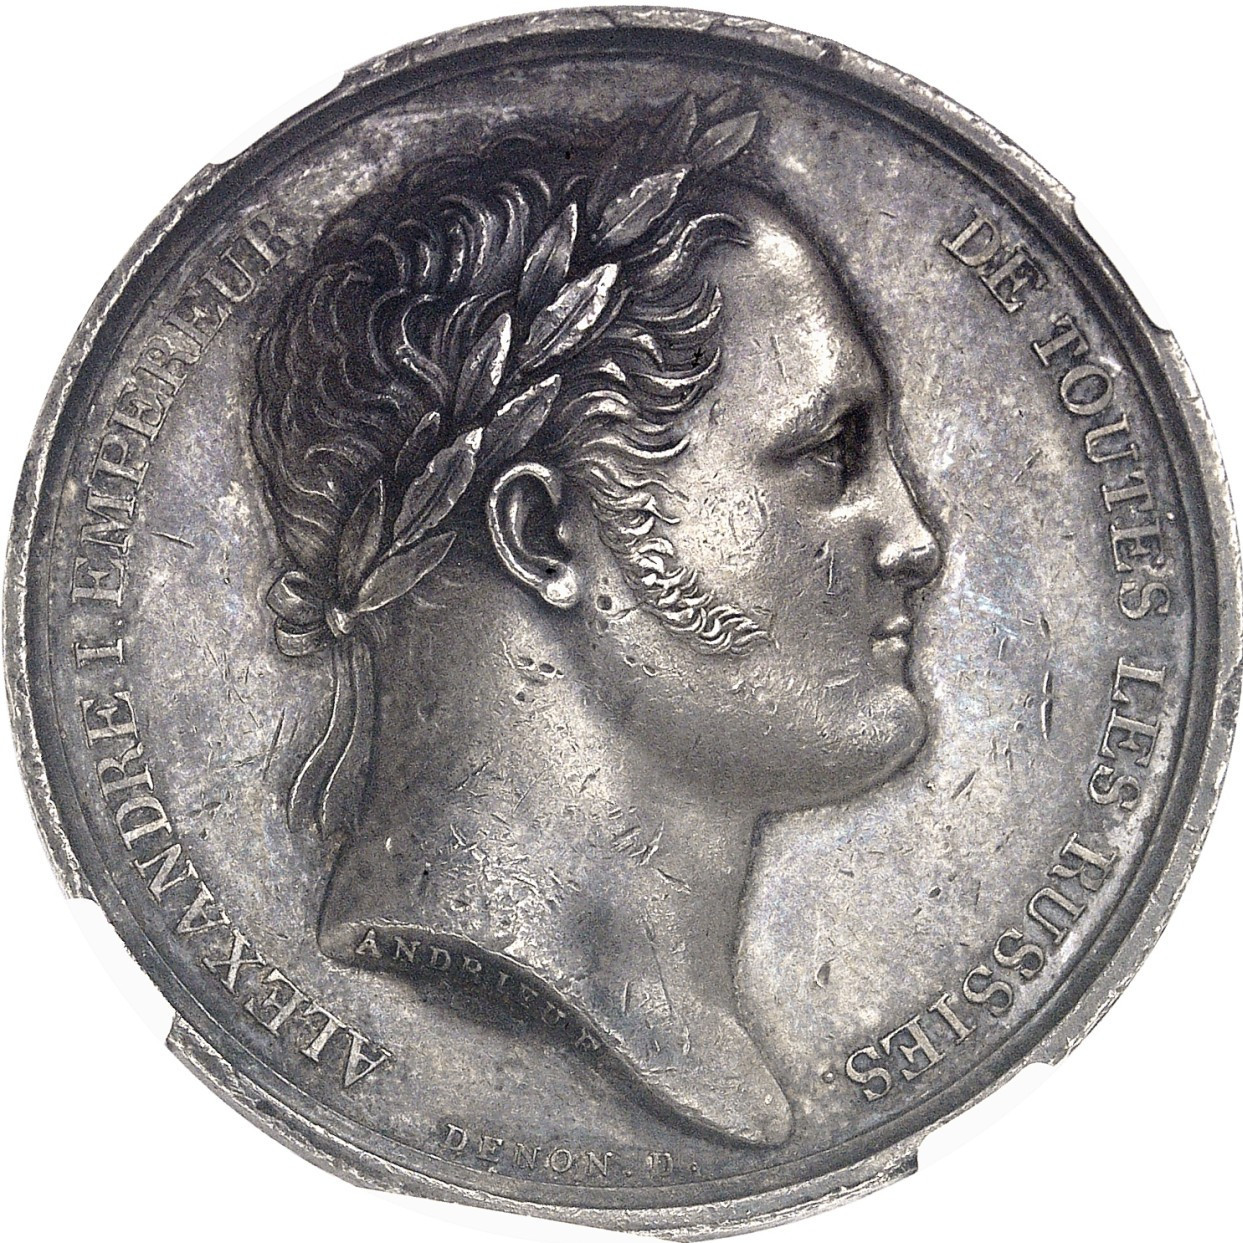 Russie - Alexandre Ier - 1814 - Argent avers